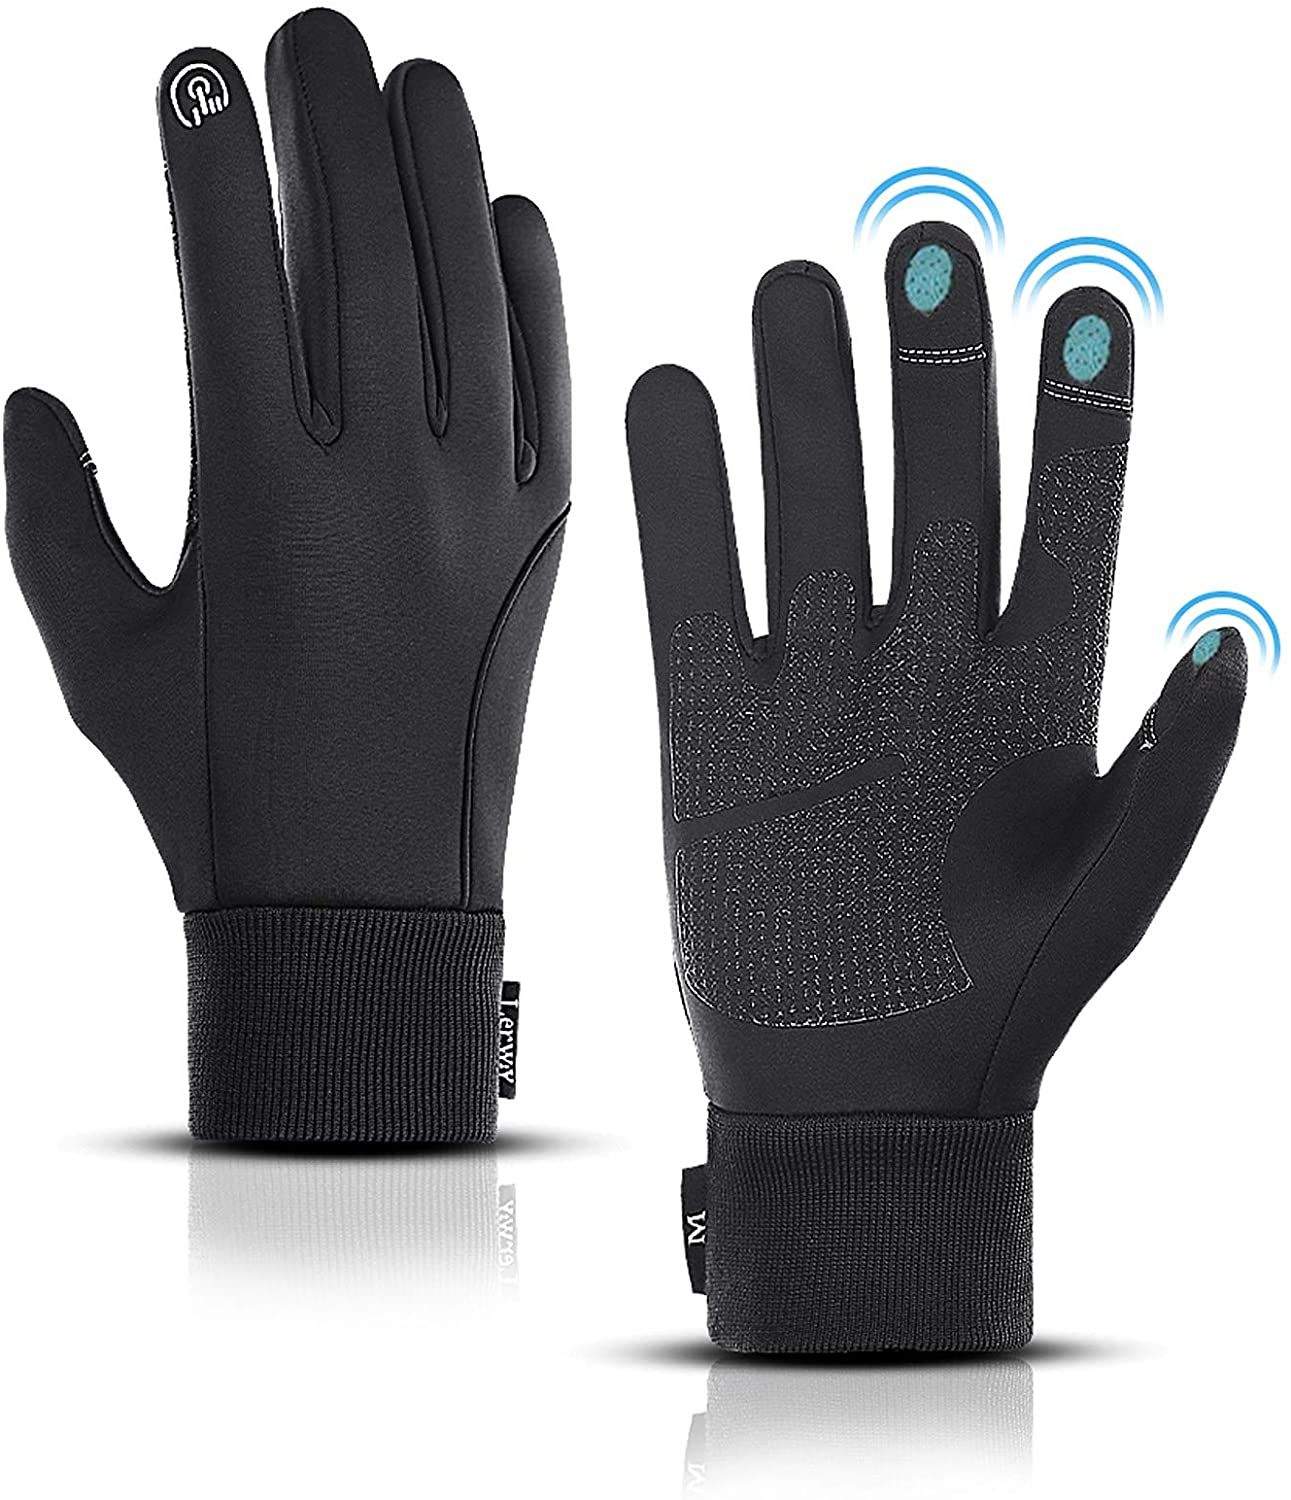 Gloves for Iceland Packing